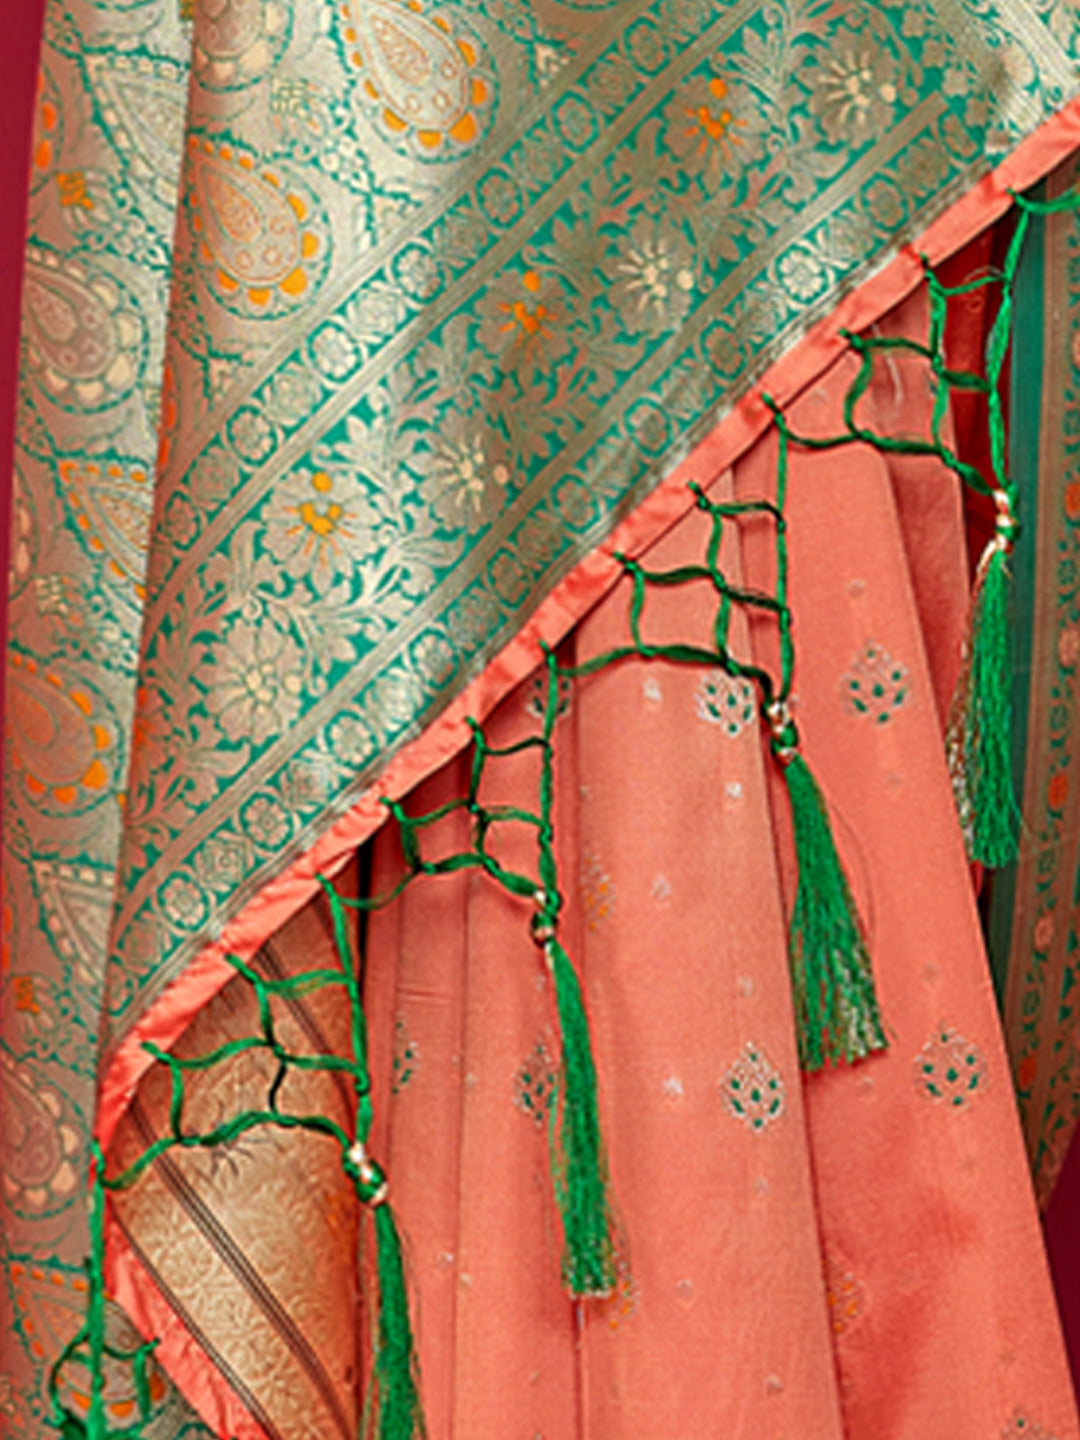 Women's Orange Silk Woven Zari Work Traditional Tassle Saree - Sangam Prints